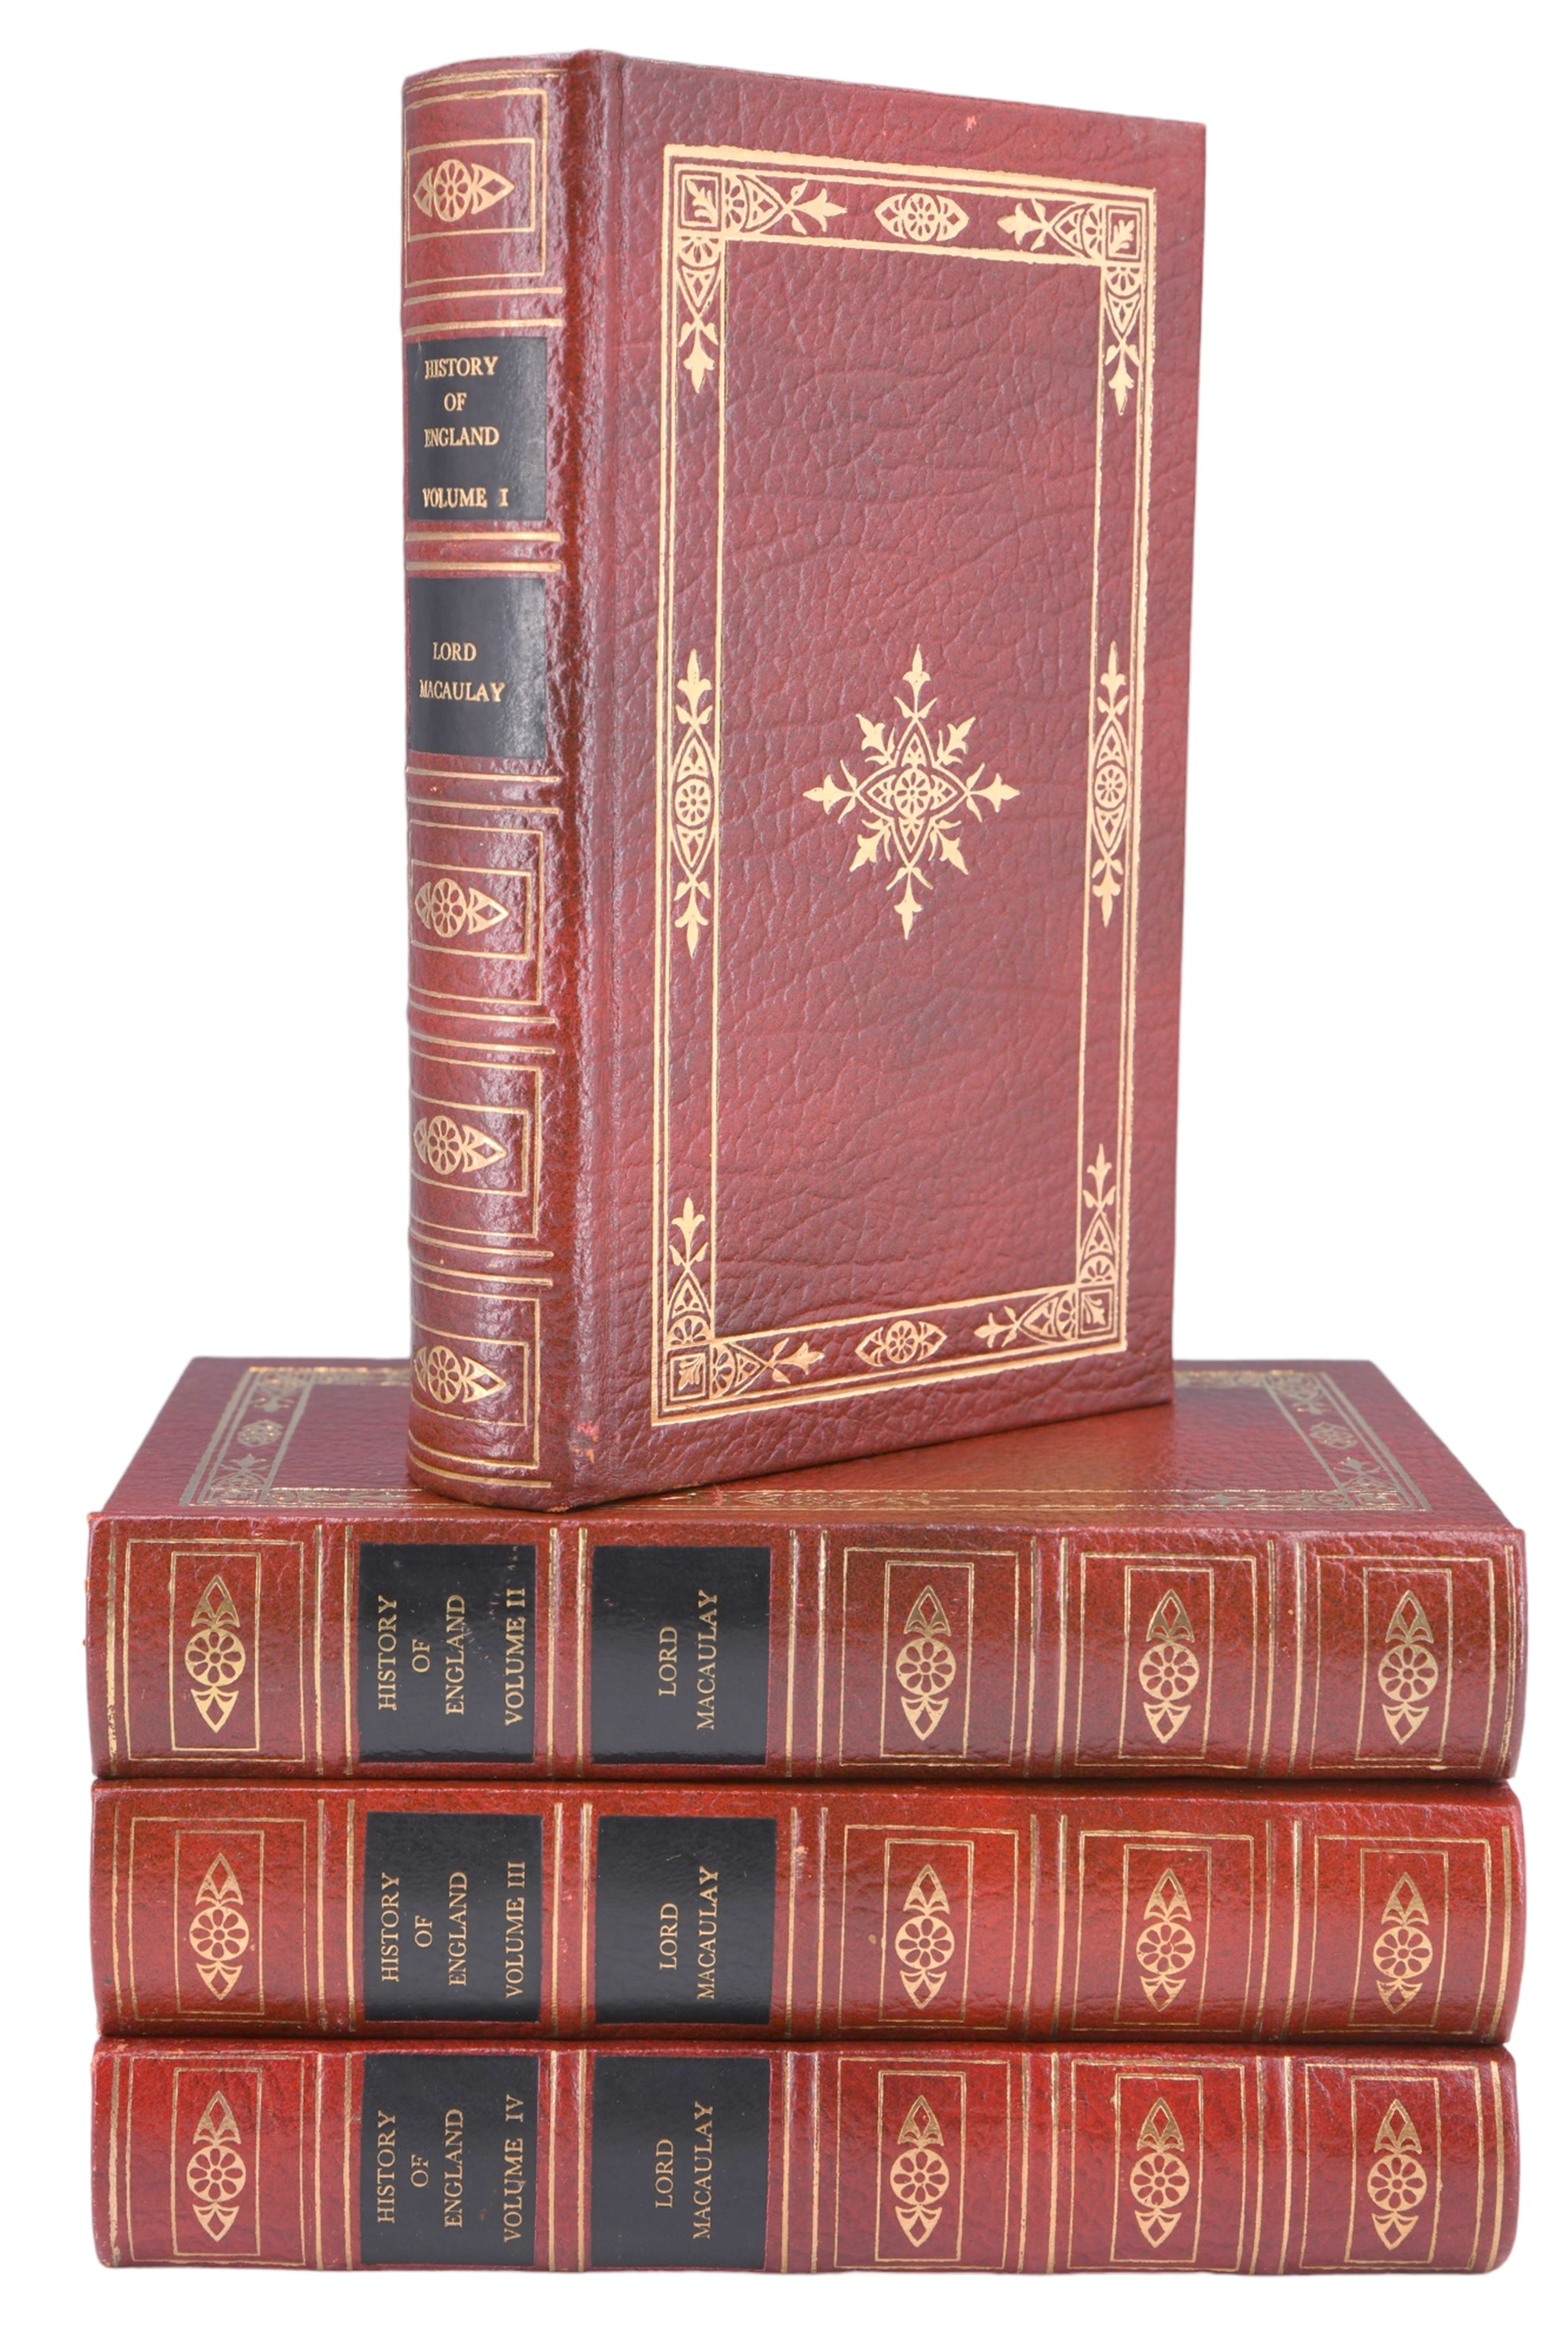 Lord Macauley, "History of England", 4 vols, Heron Books, 1697